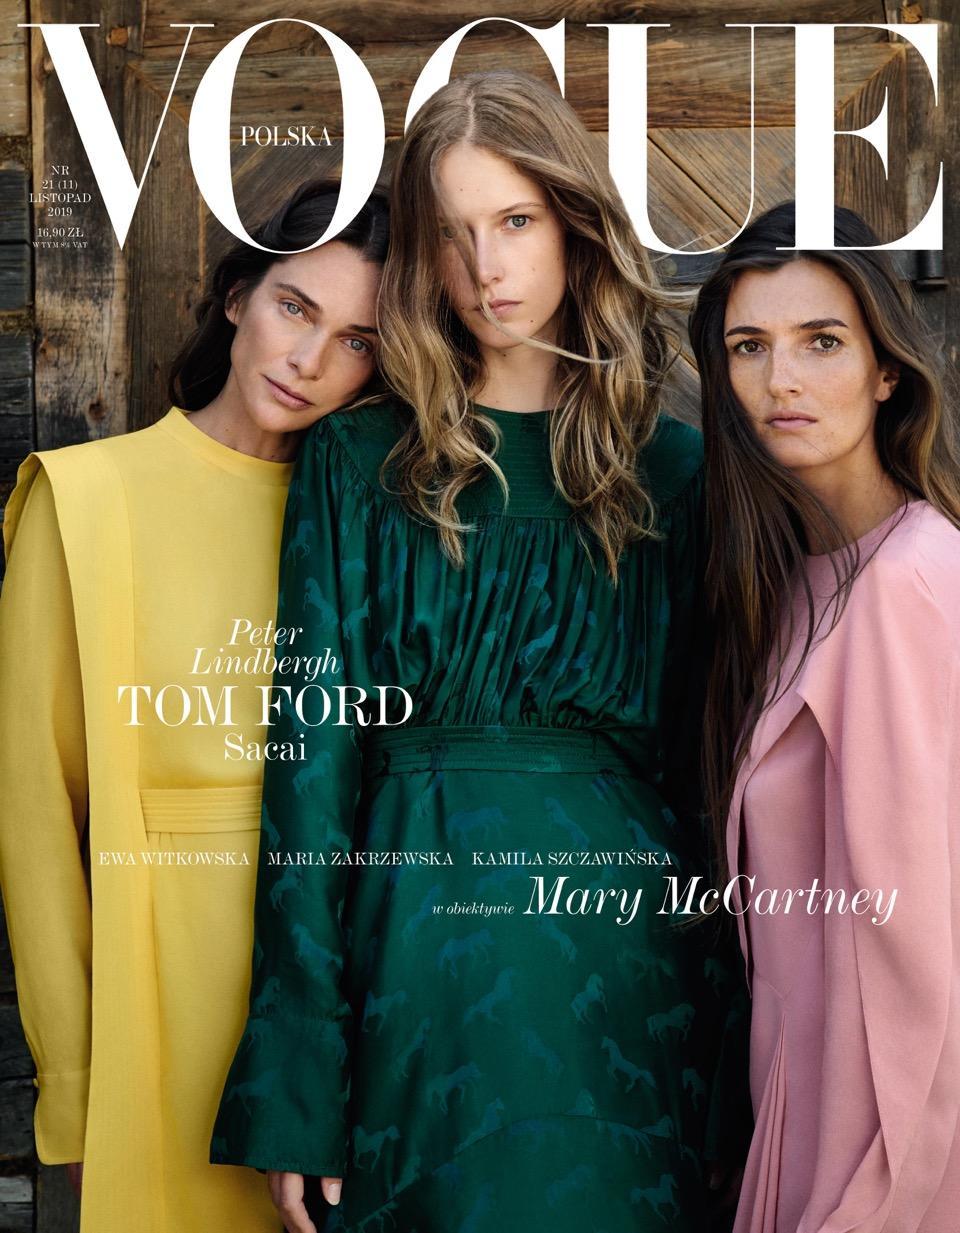 Vogue 2019